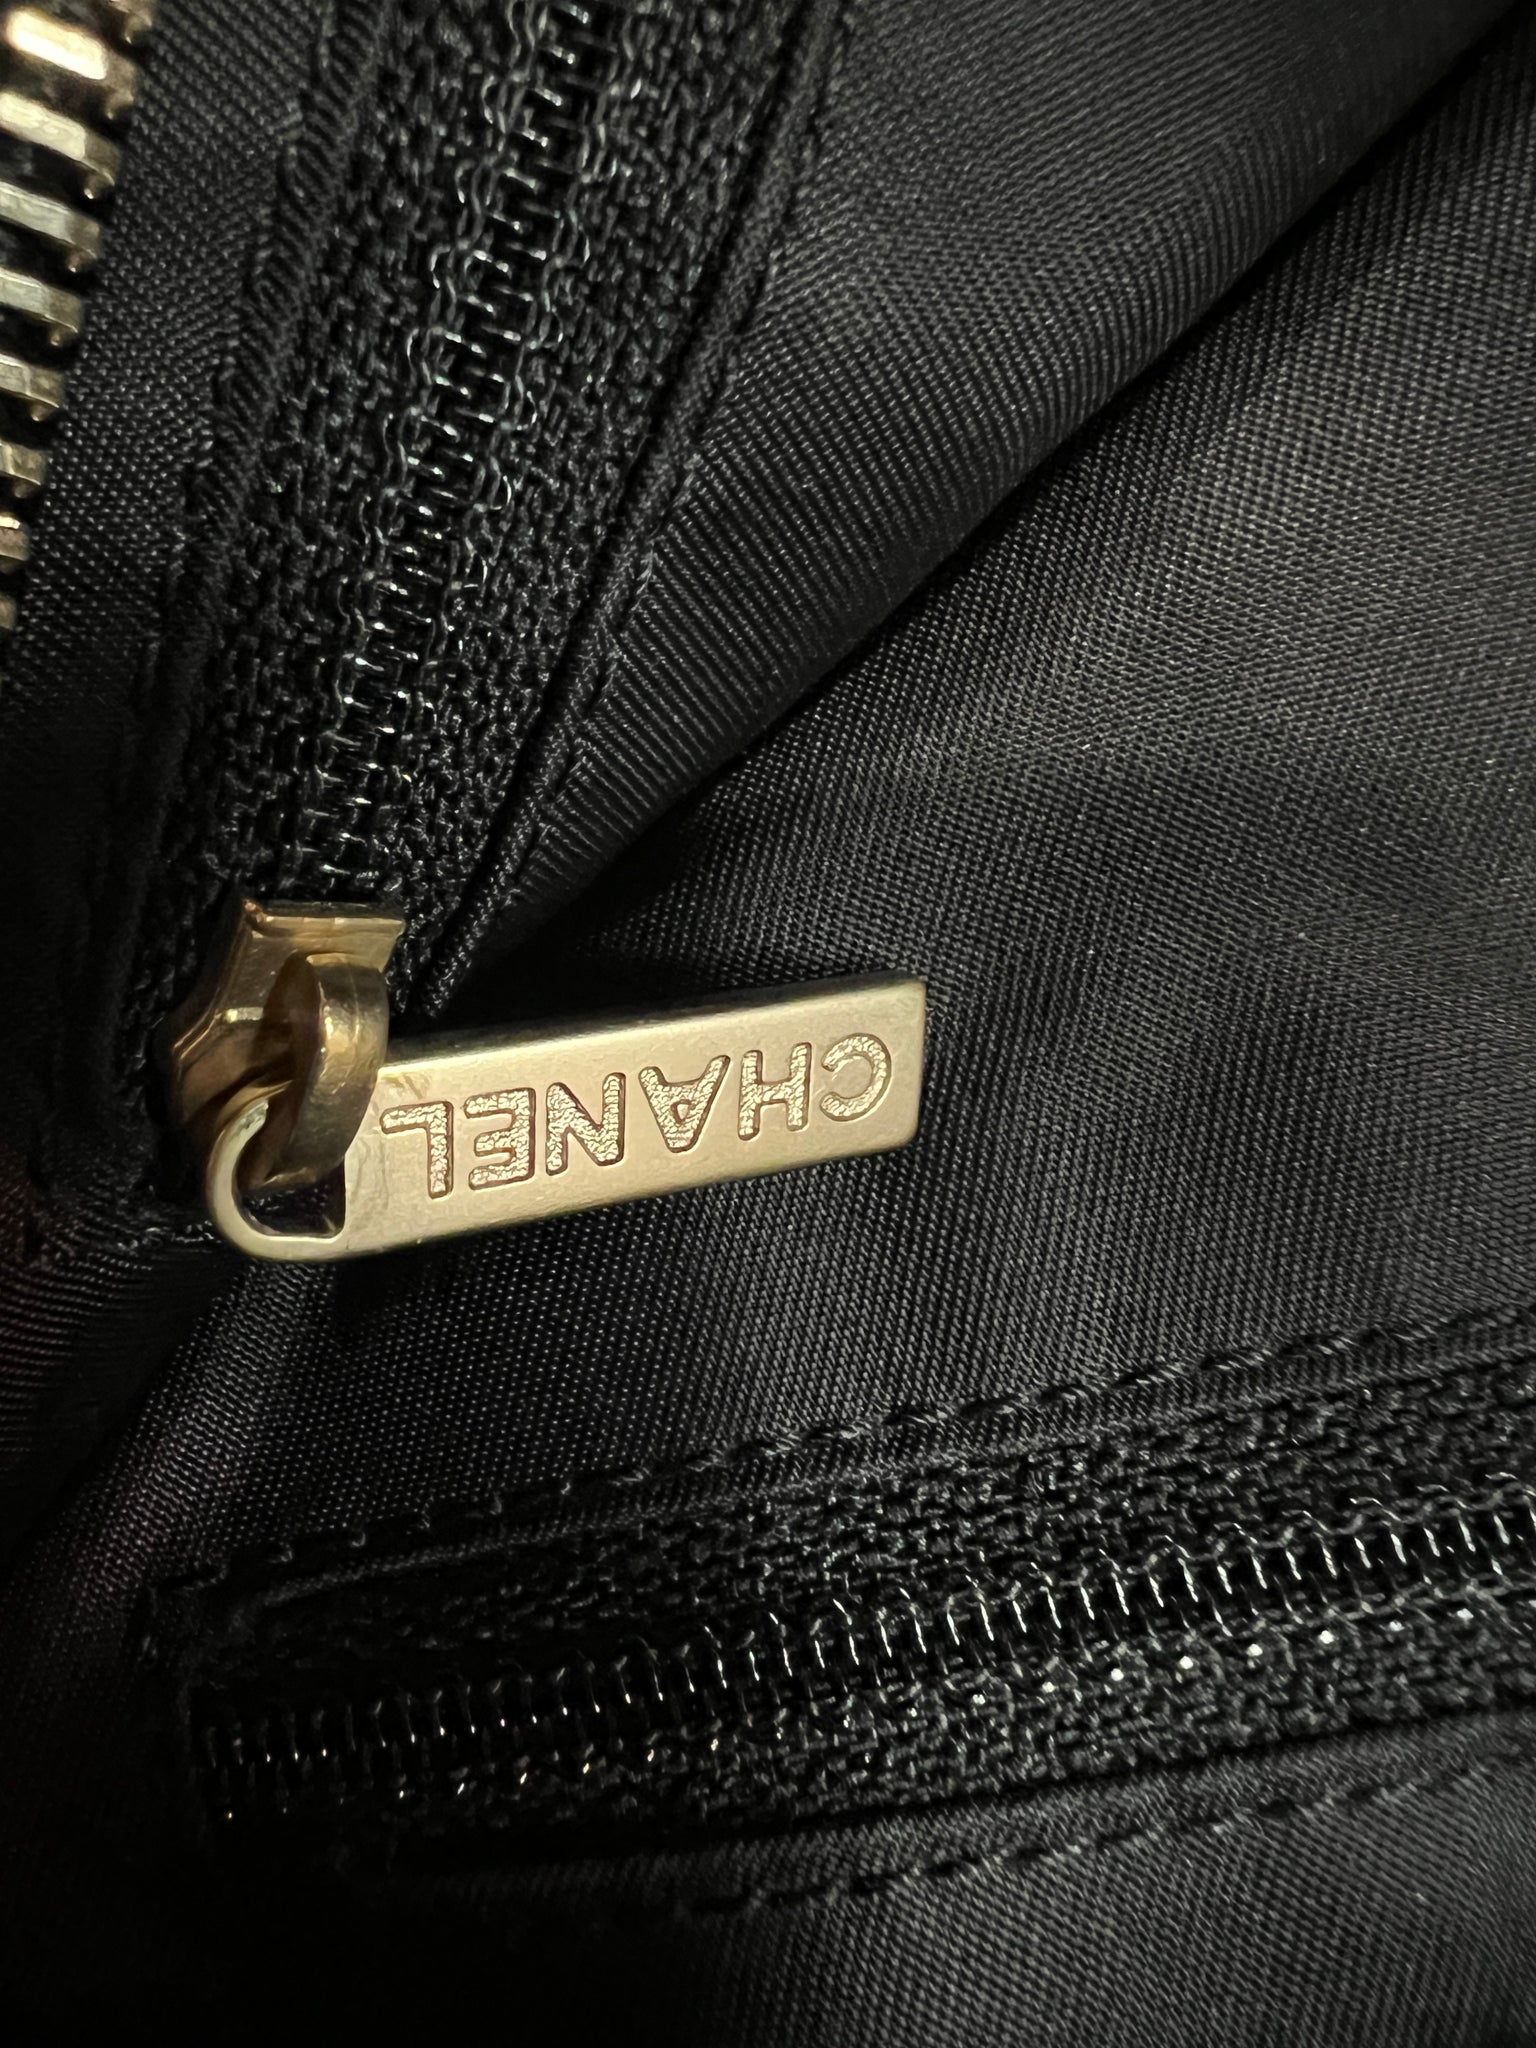 Authentic Nylon Chanel Travel Bag in Black – Relics to Rhinestones